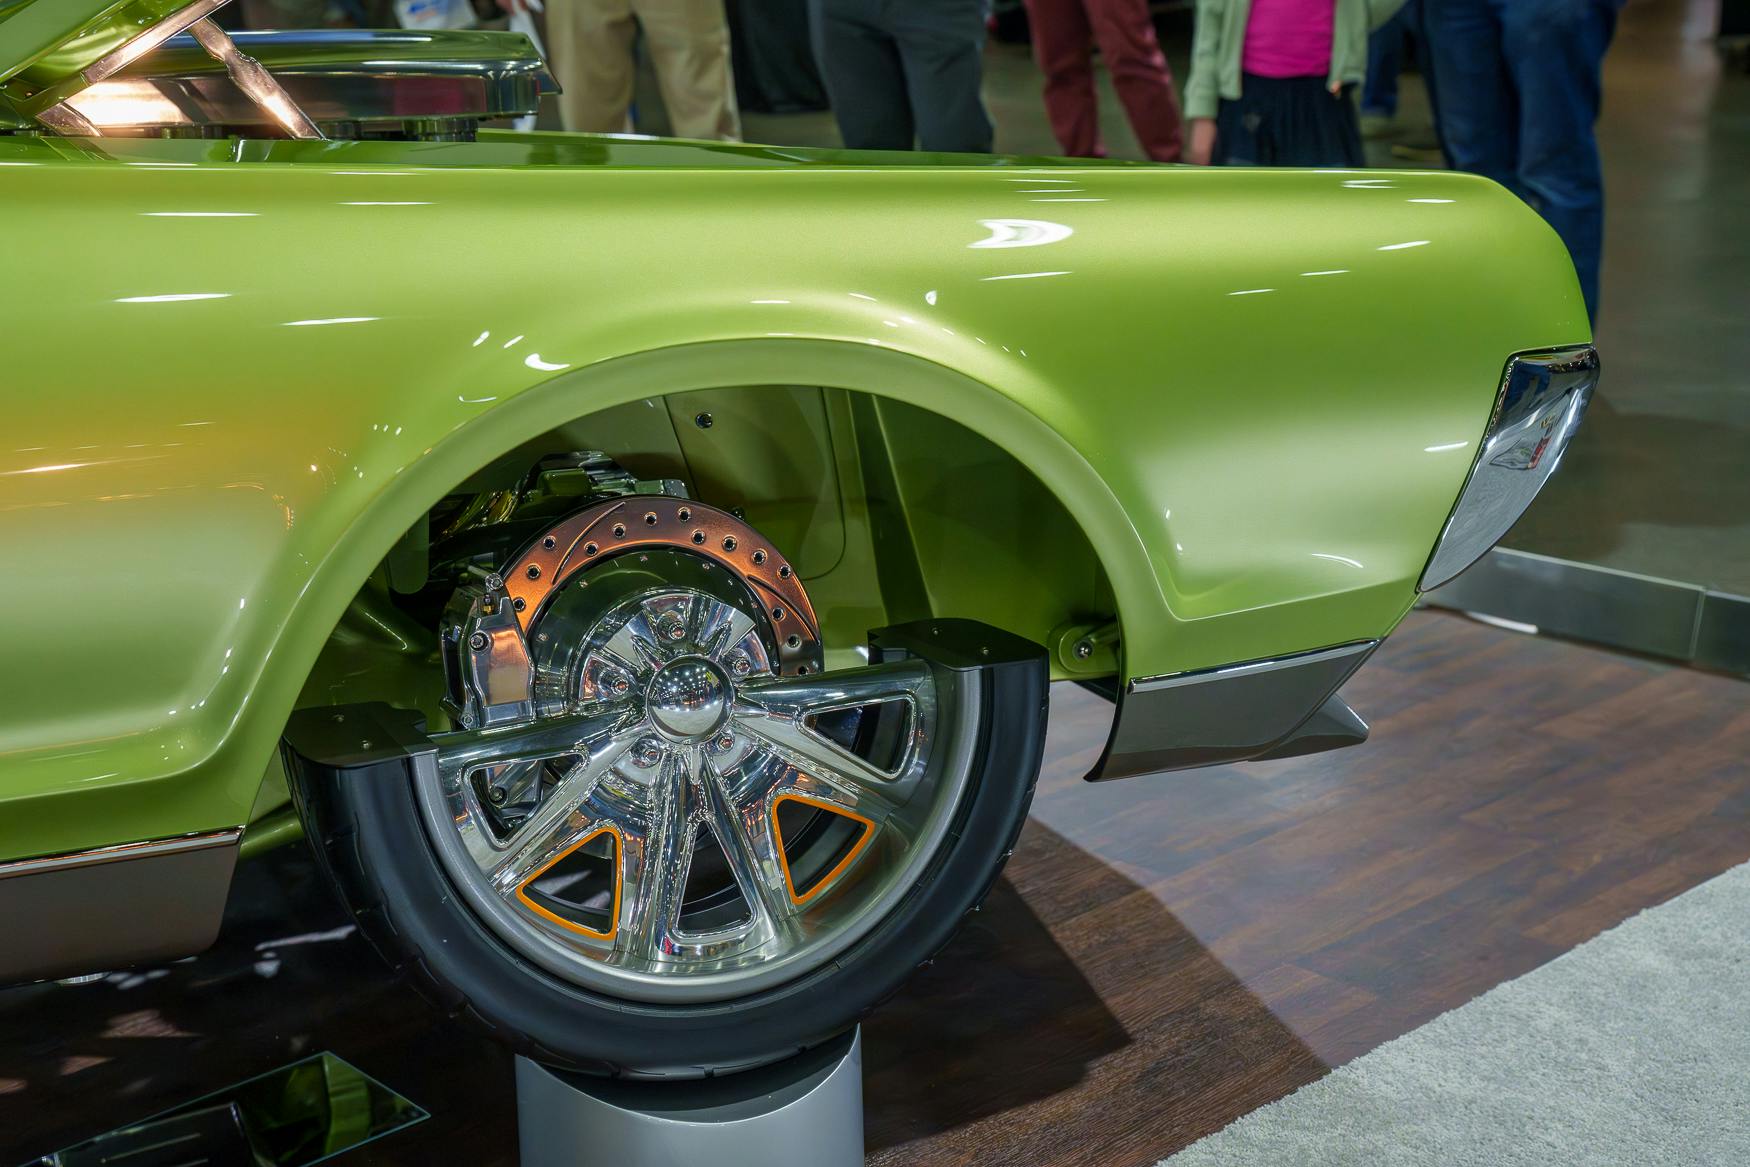 1968 Mercury Cougar Predator wheel tire brake closeup